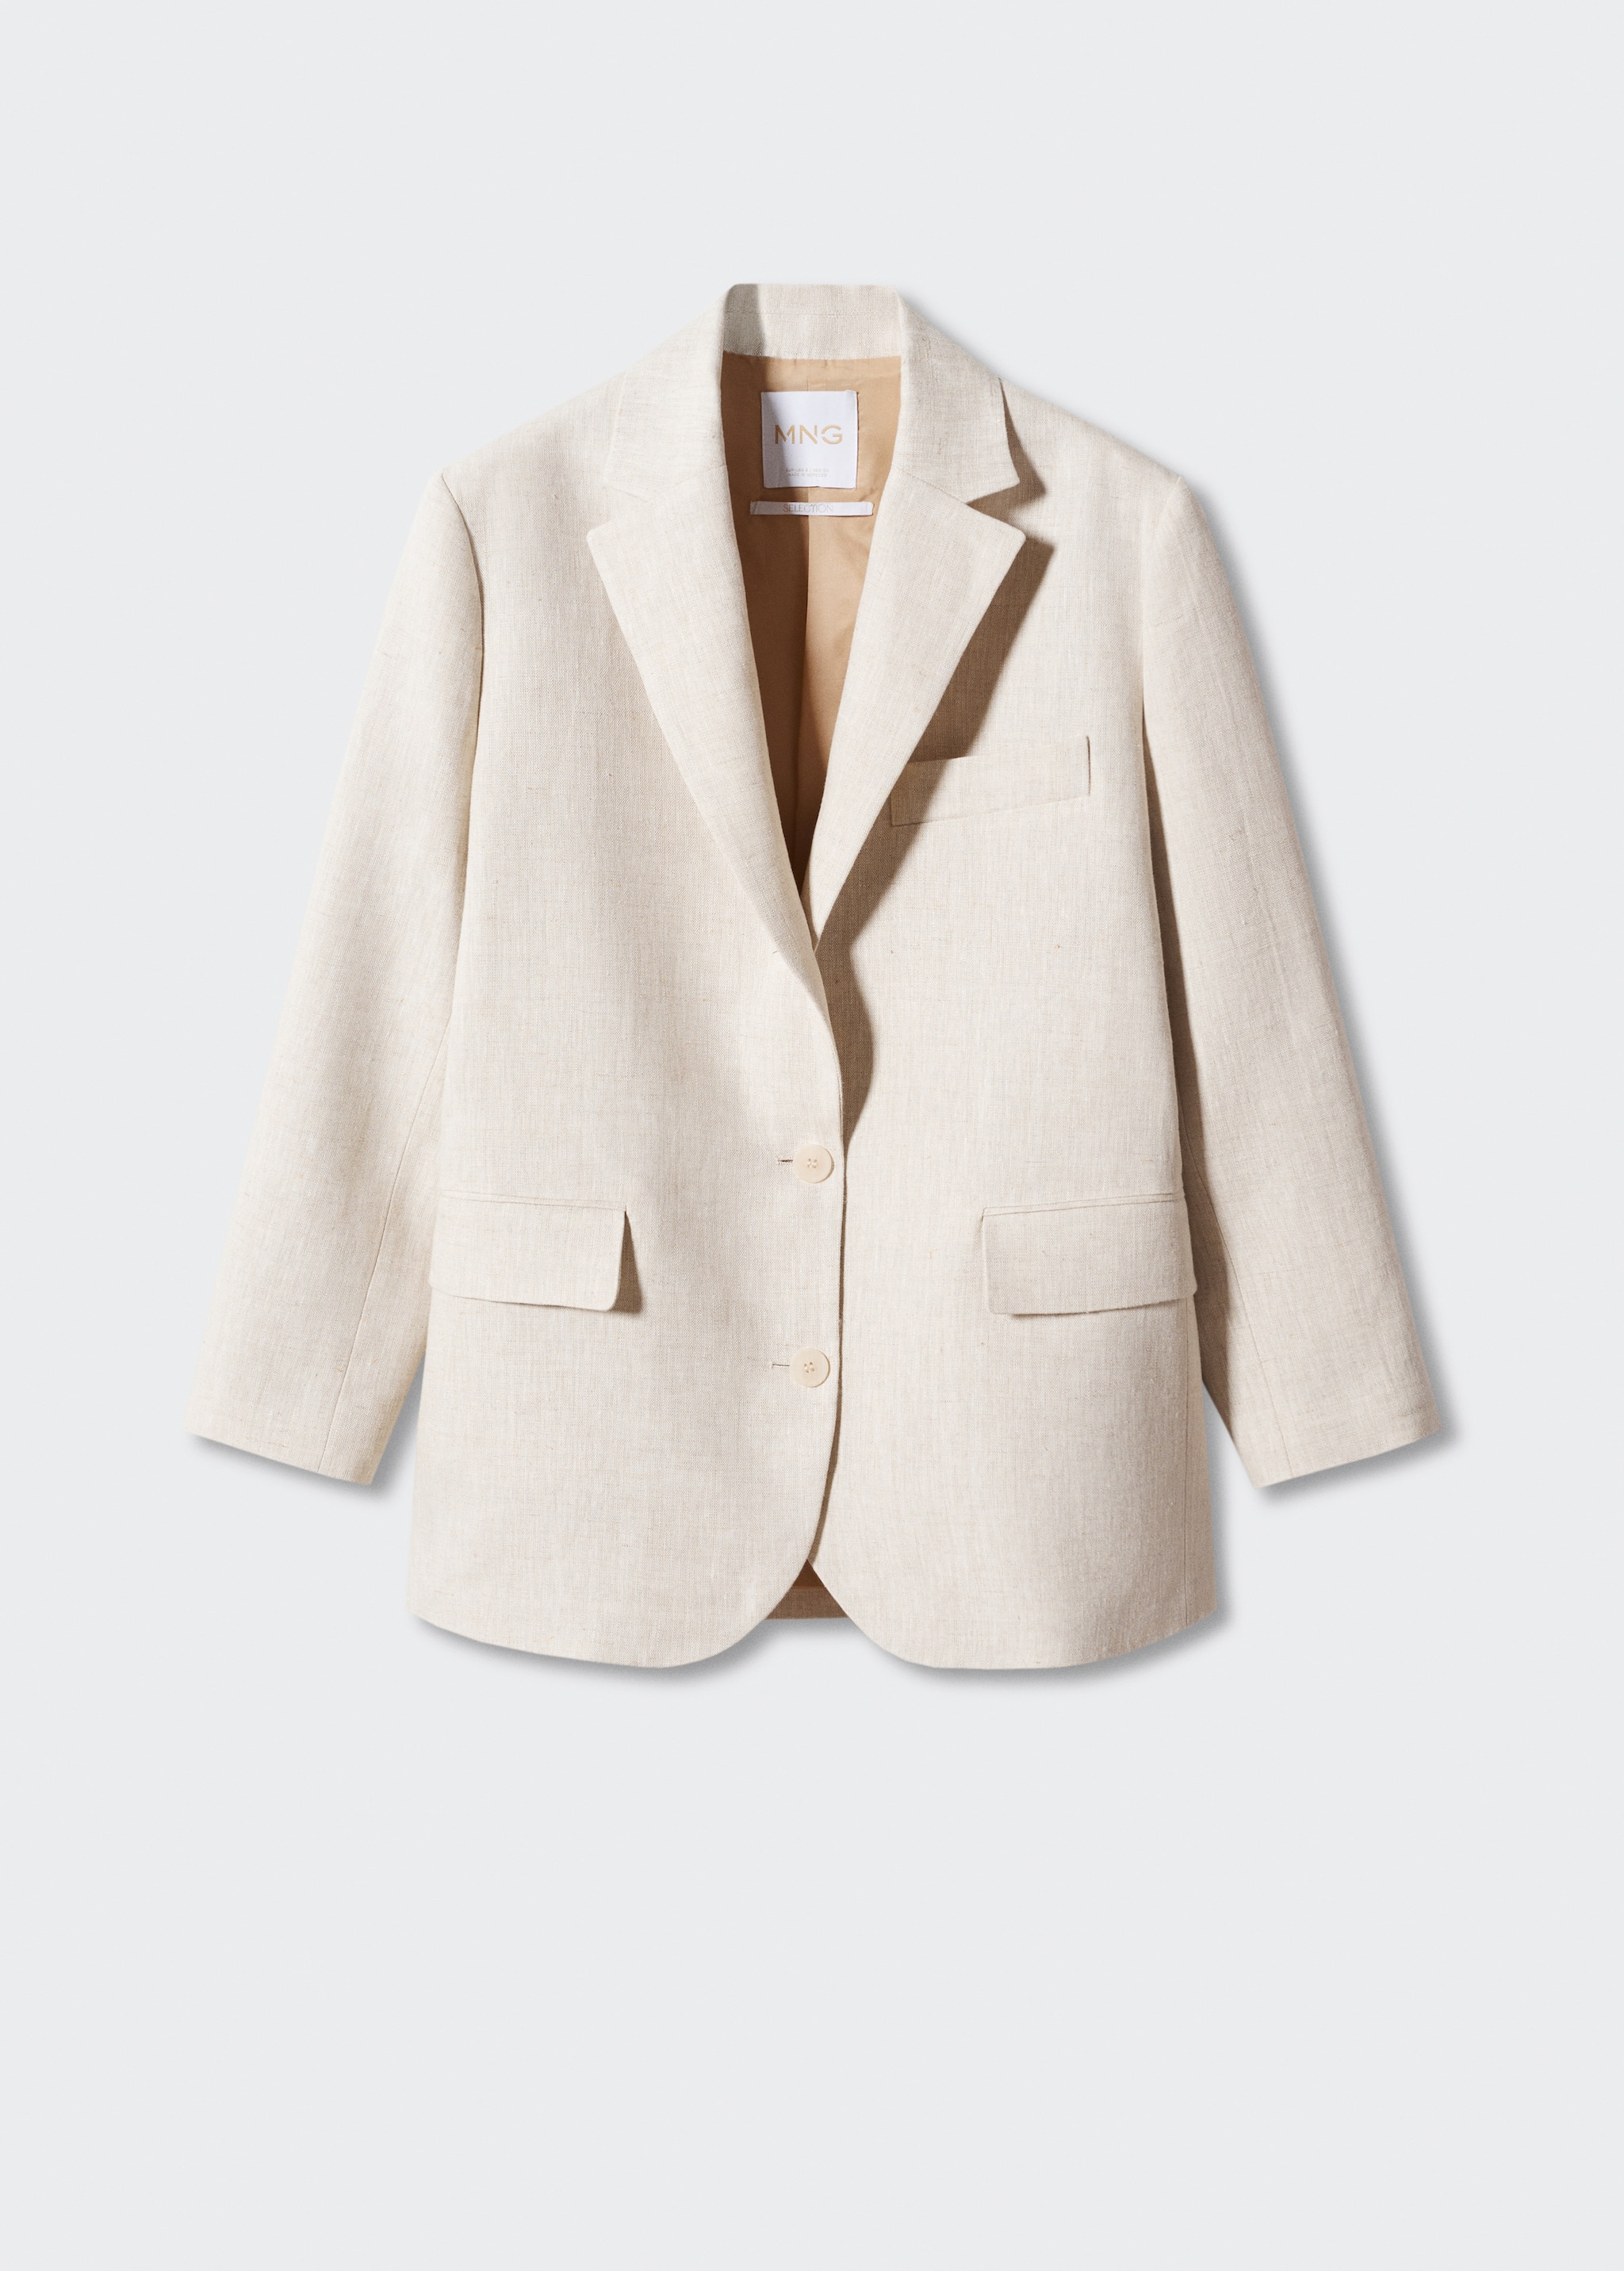 Linen oversized jacket  - Article without model